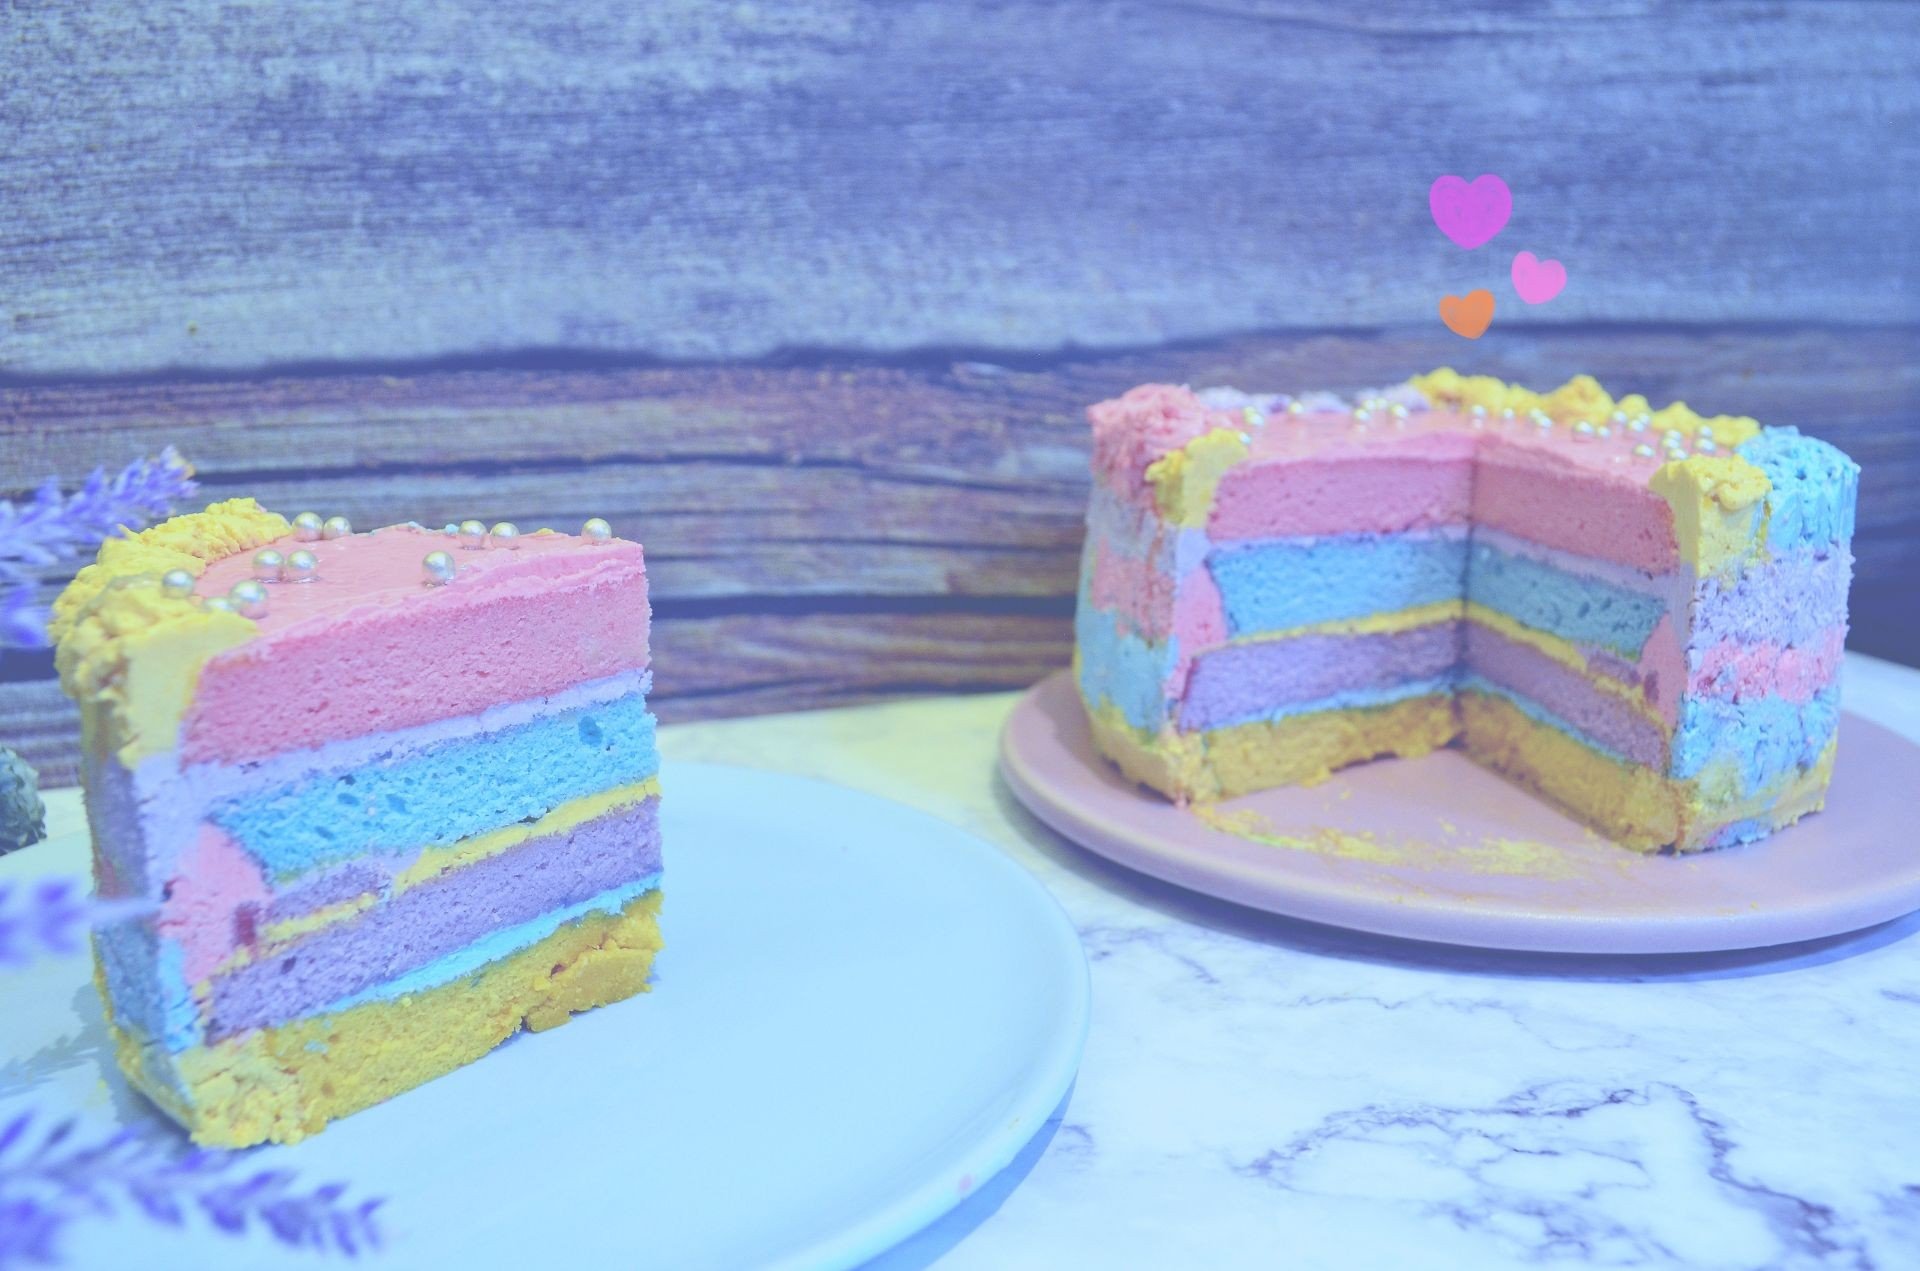 Homemade rainbow cake เมนูอาหารว่าง